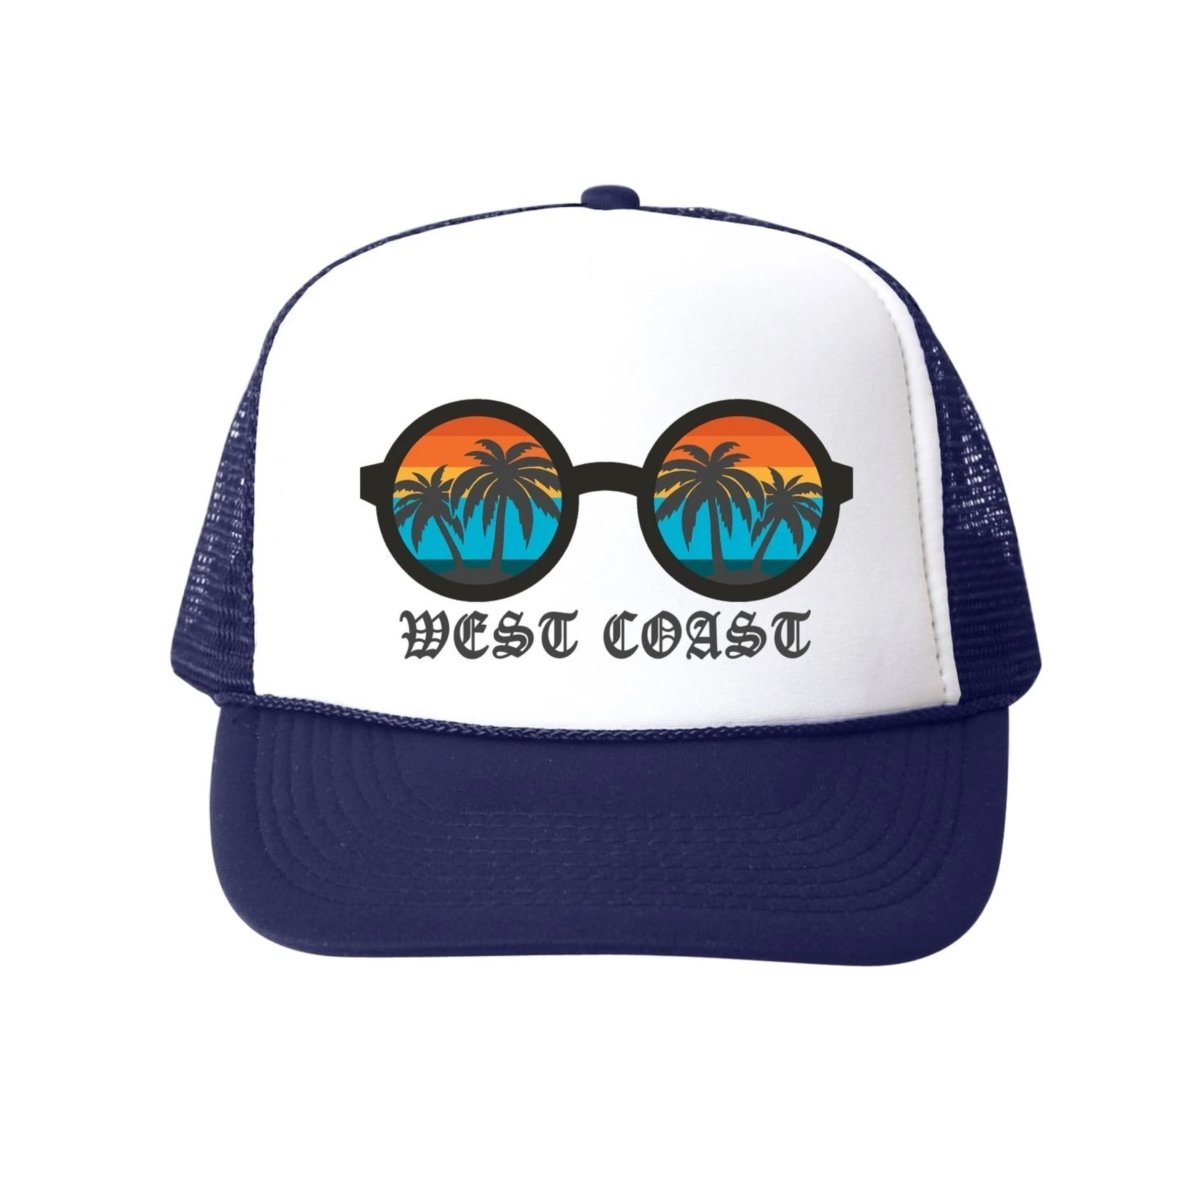 WEST COAST TRUCKER HAT - HATS